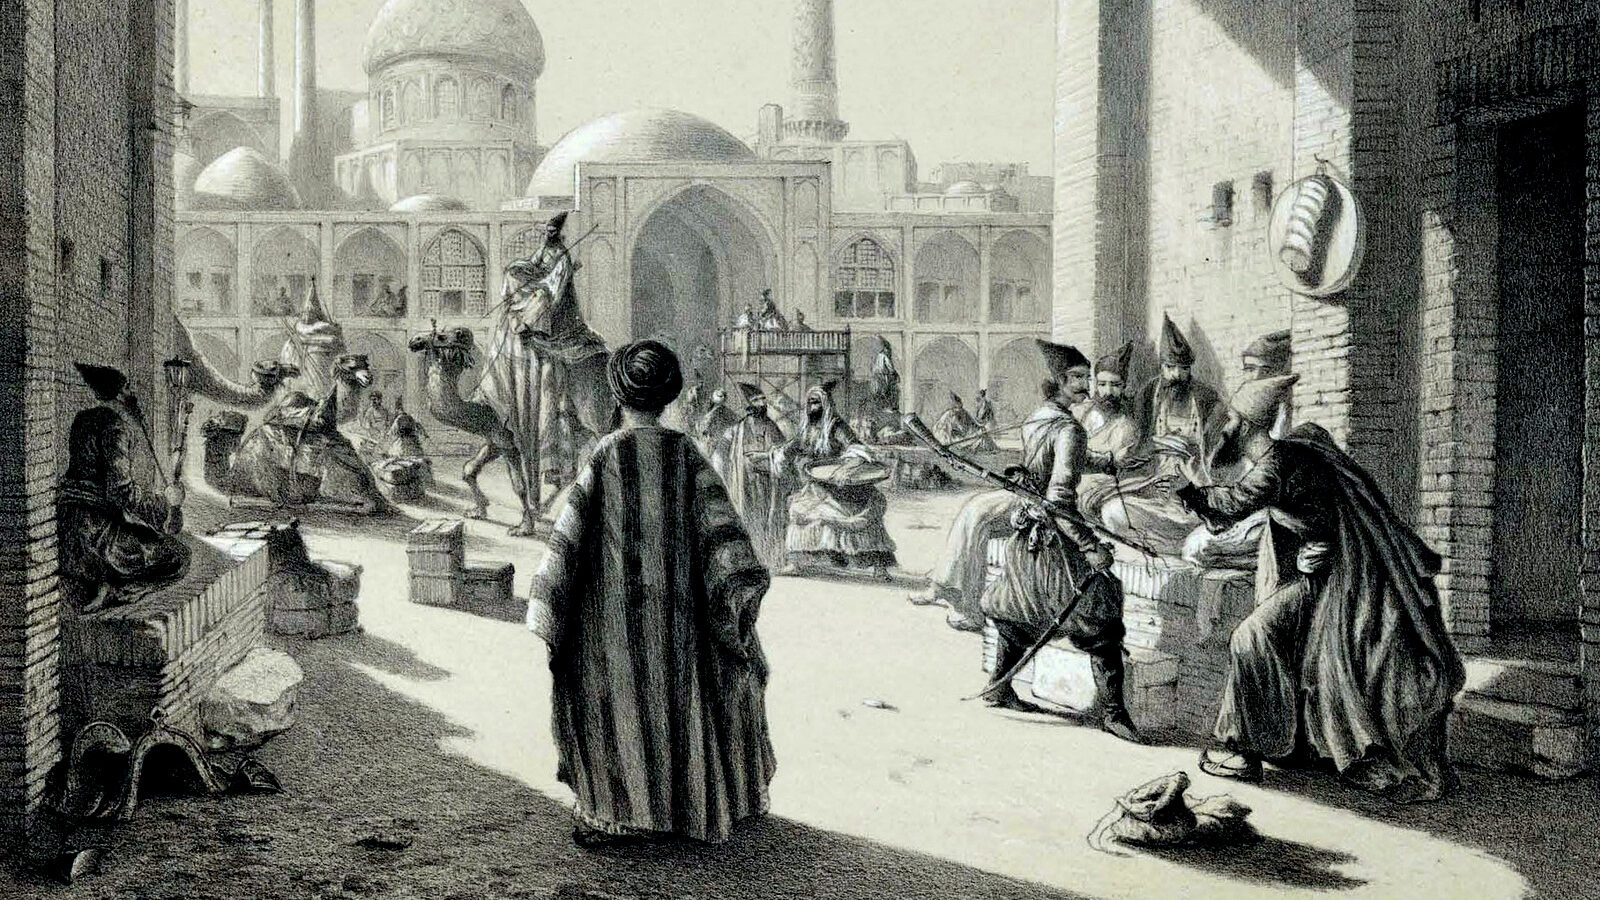 “Entrance of a Caravanserai in Isfahan” (1840), by French Orientalist painter Eugène Flandin. Public domain via Wikimedia Commons.